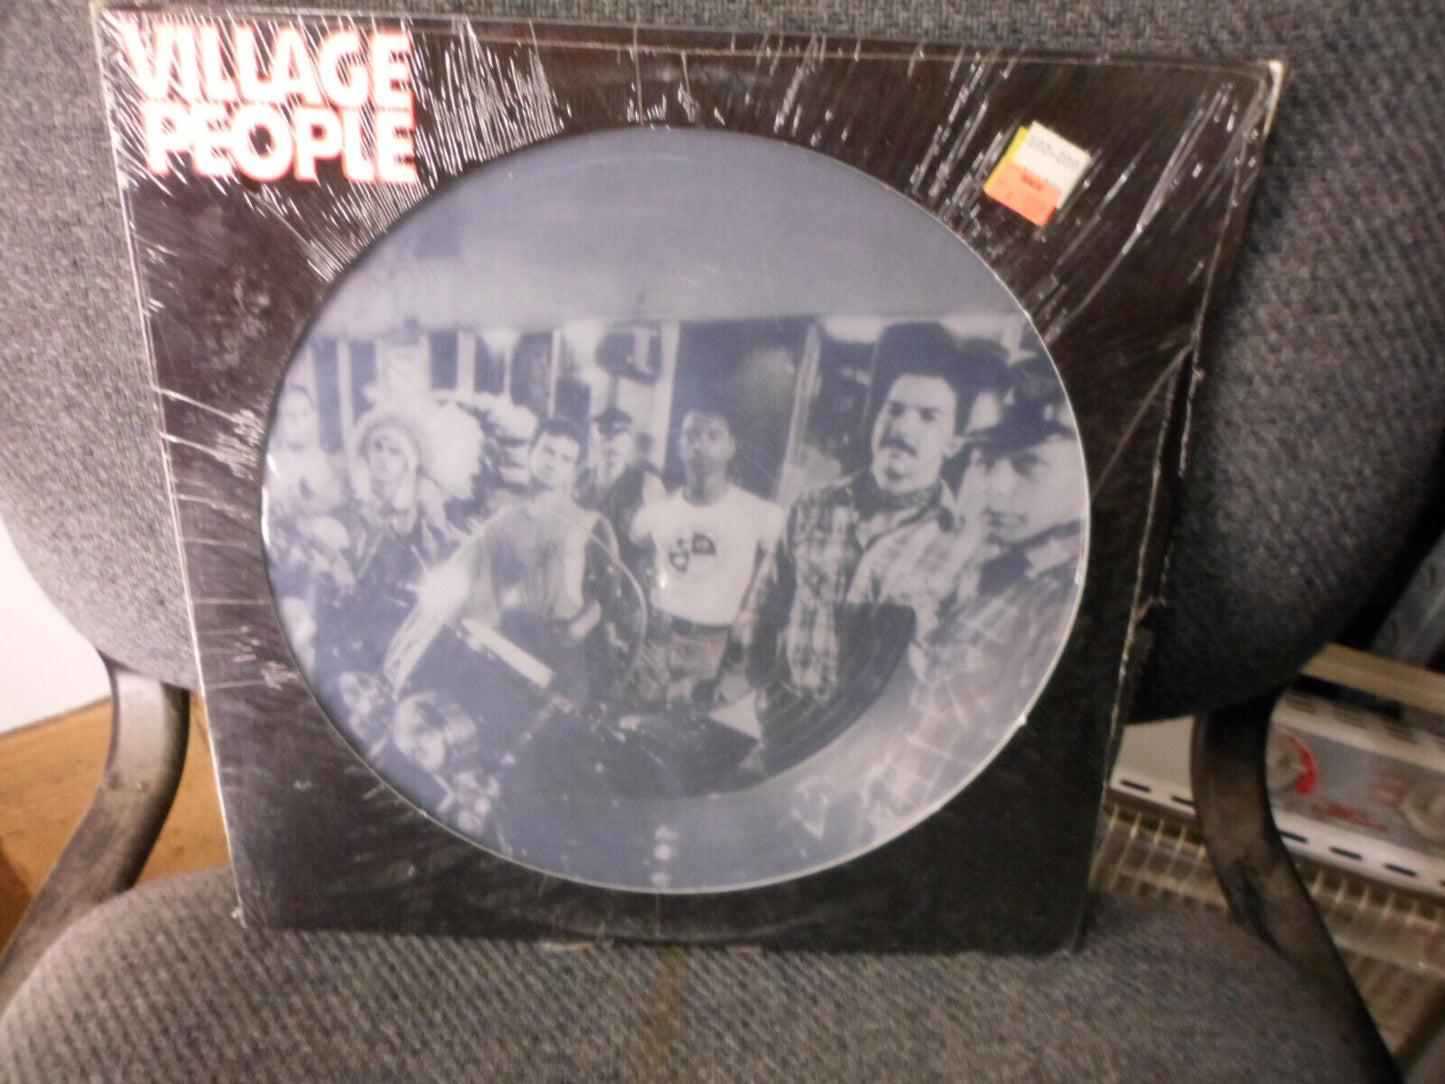 VILLAGE PEOLPE 1978 Sealed Picture Disc Record Album LP